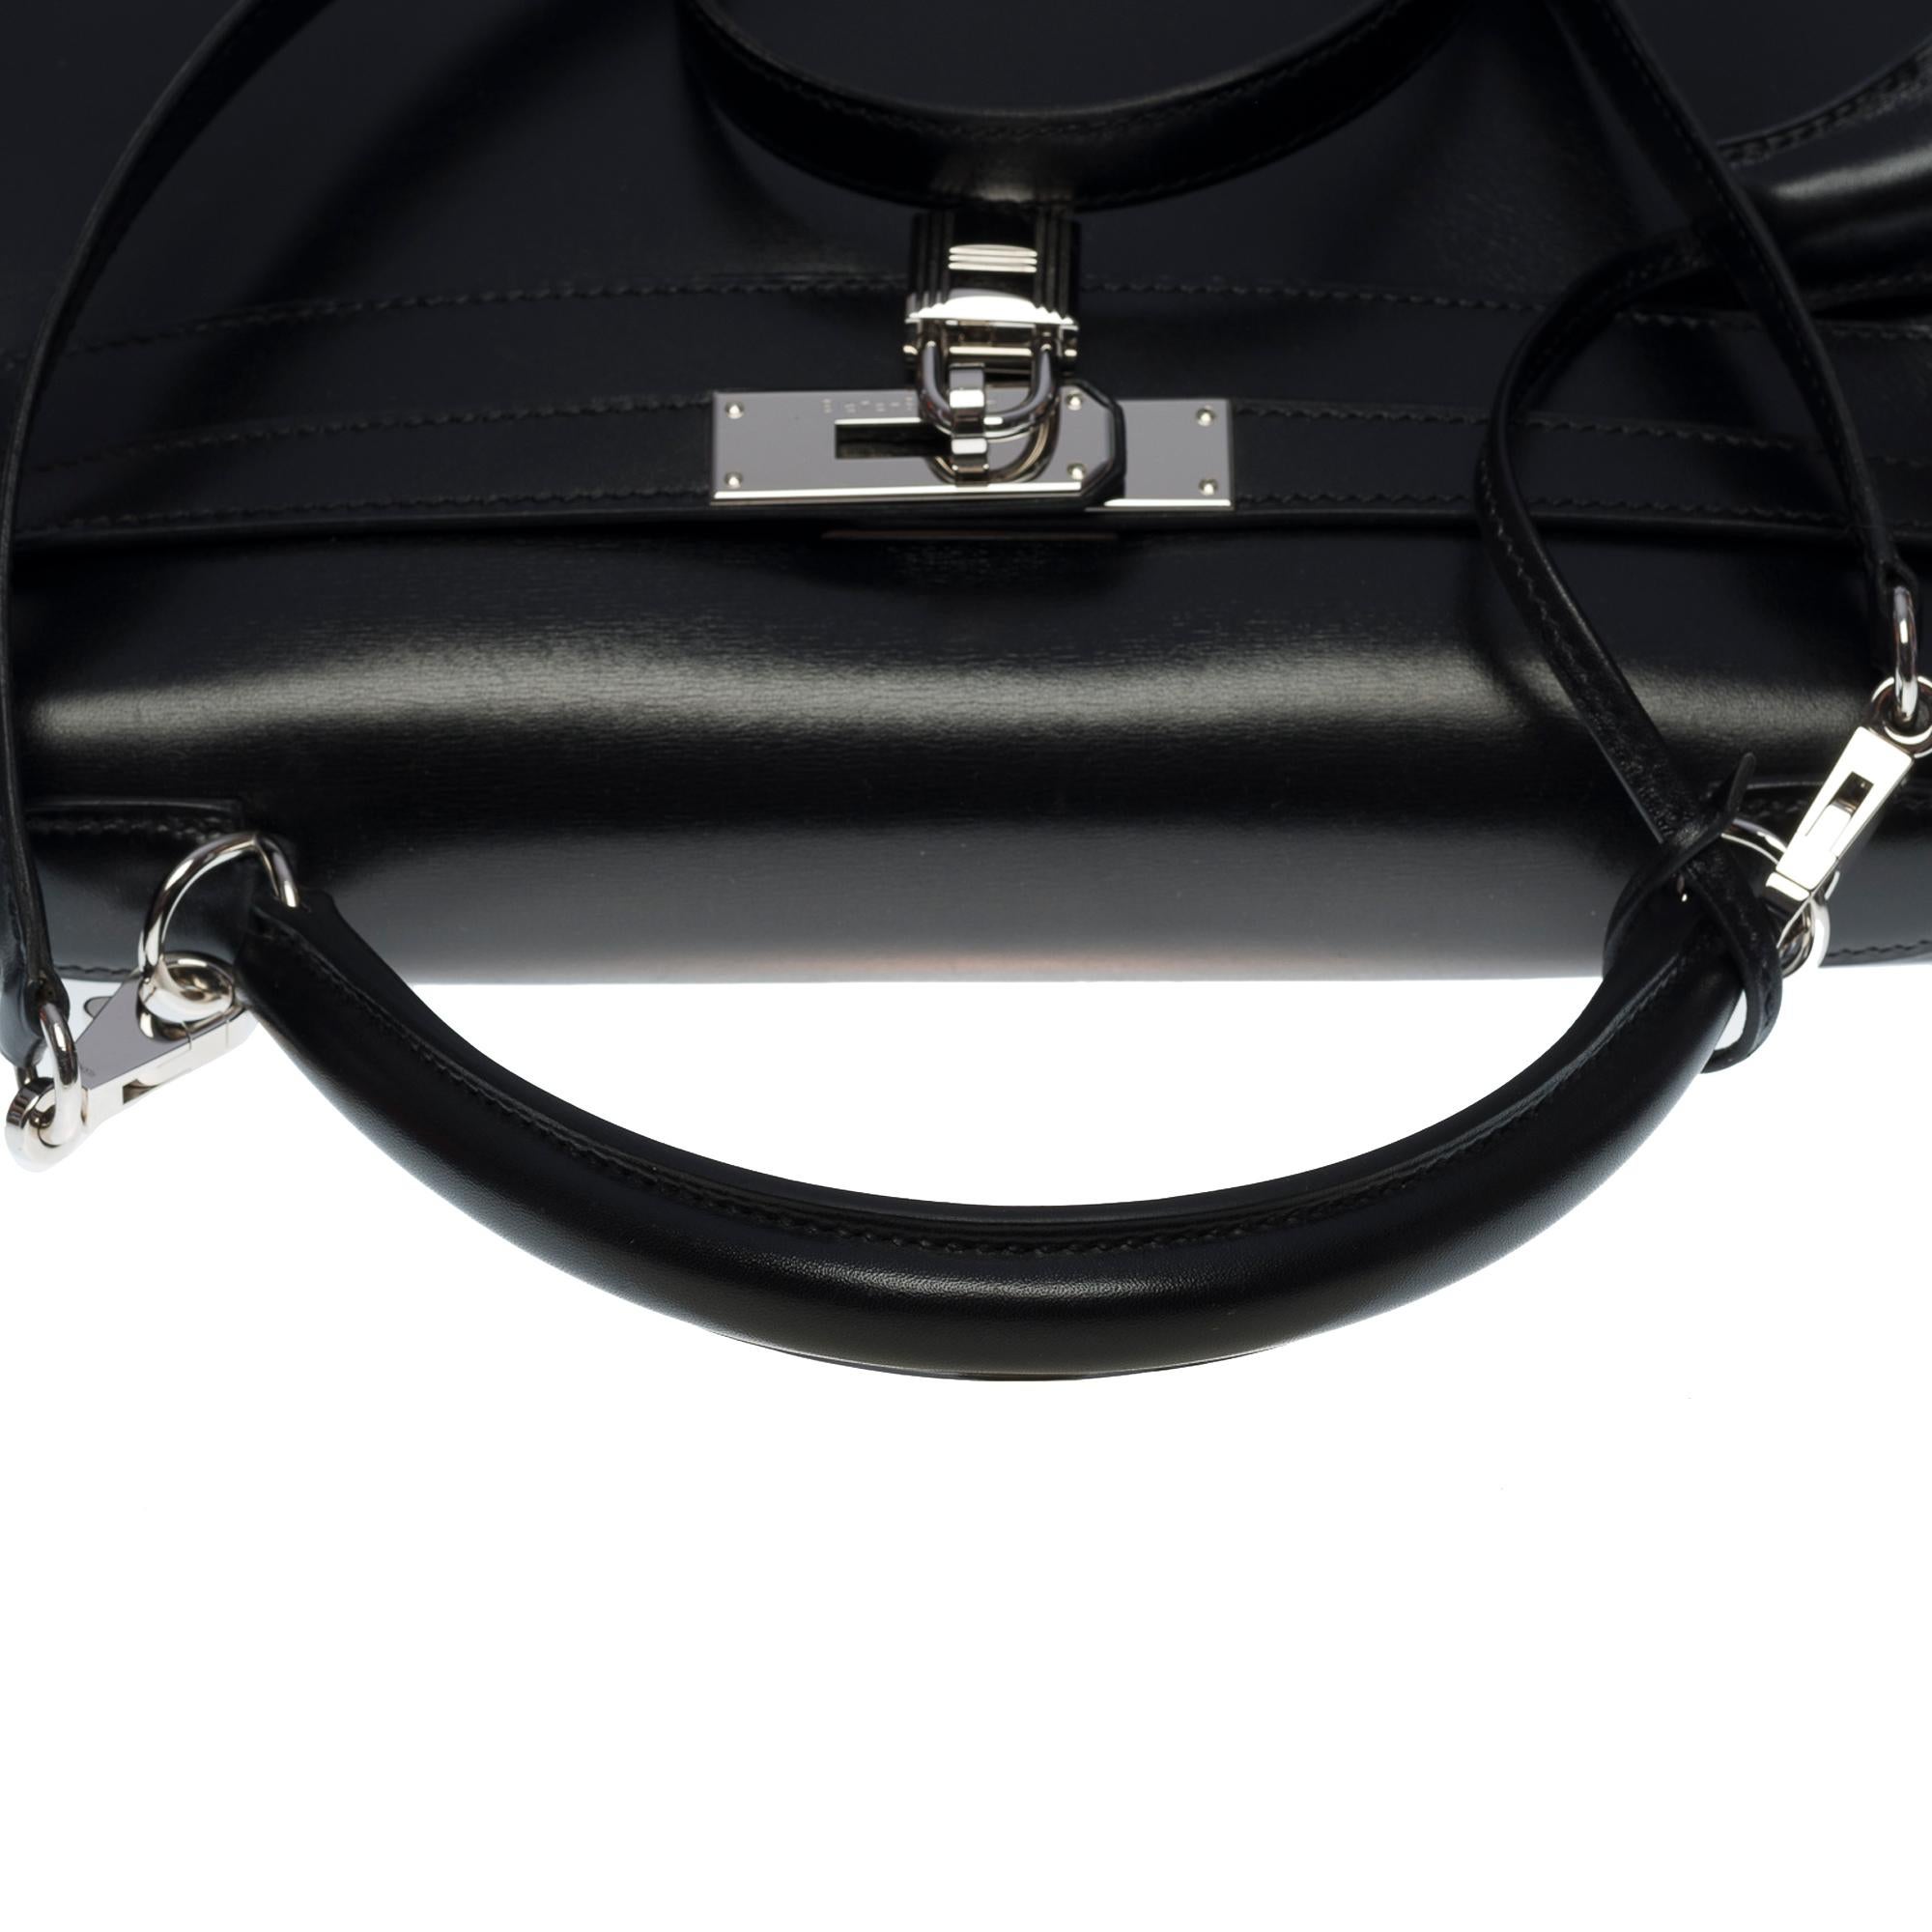 Rare Hermès Kelly 32 retourne handbag strap in black box calf leather, SHW 4